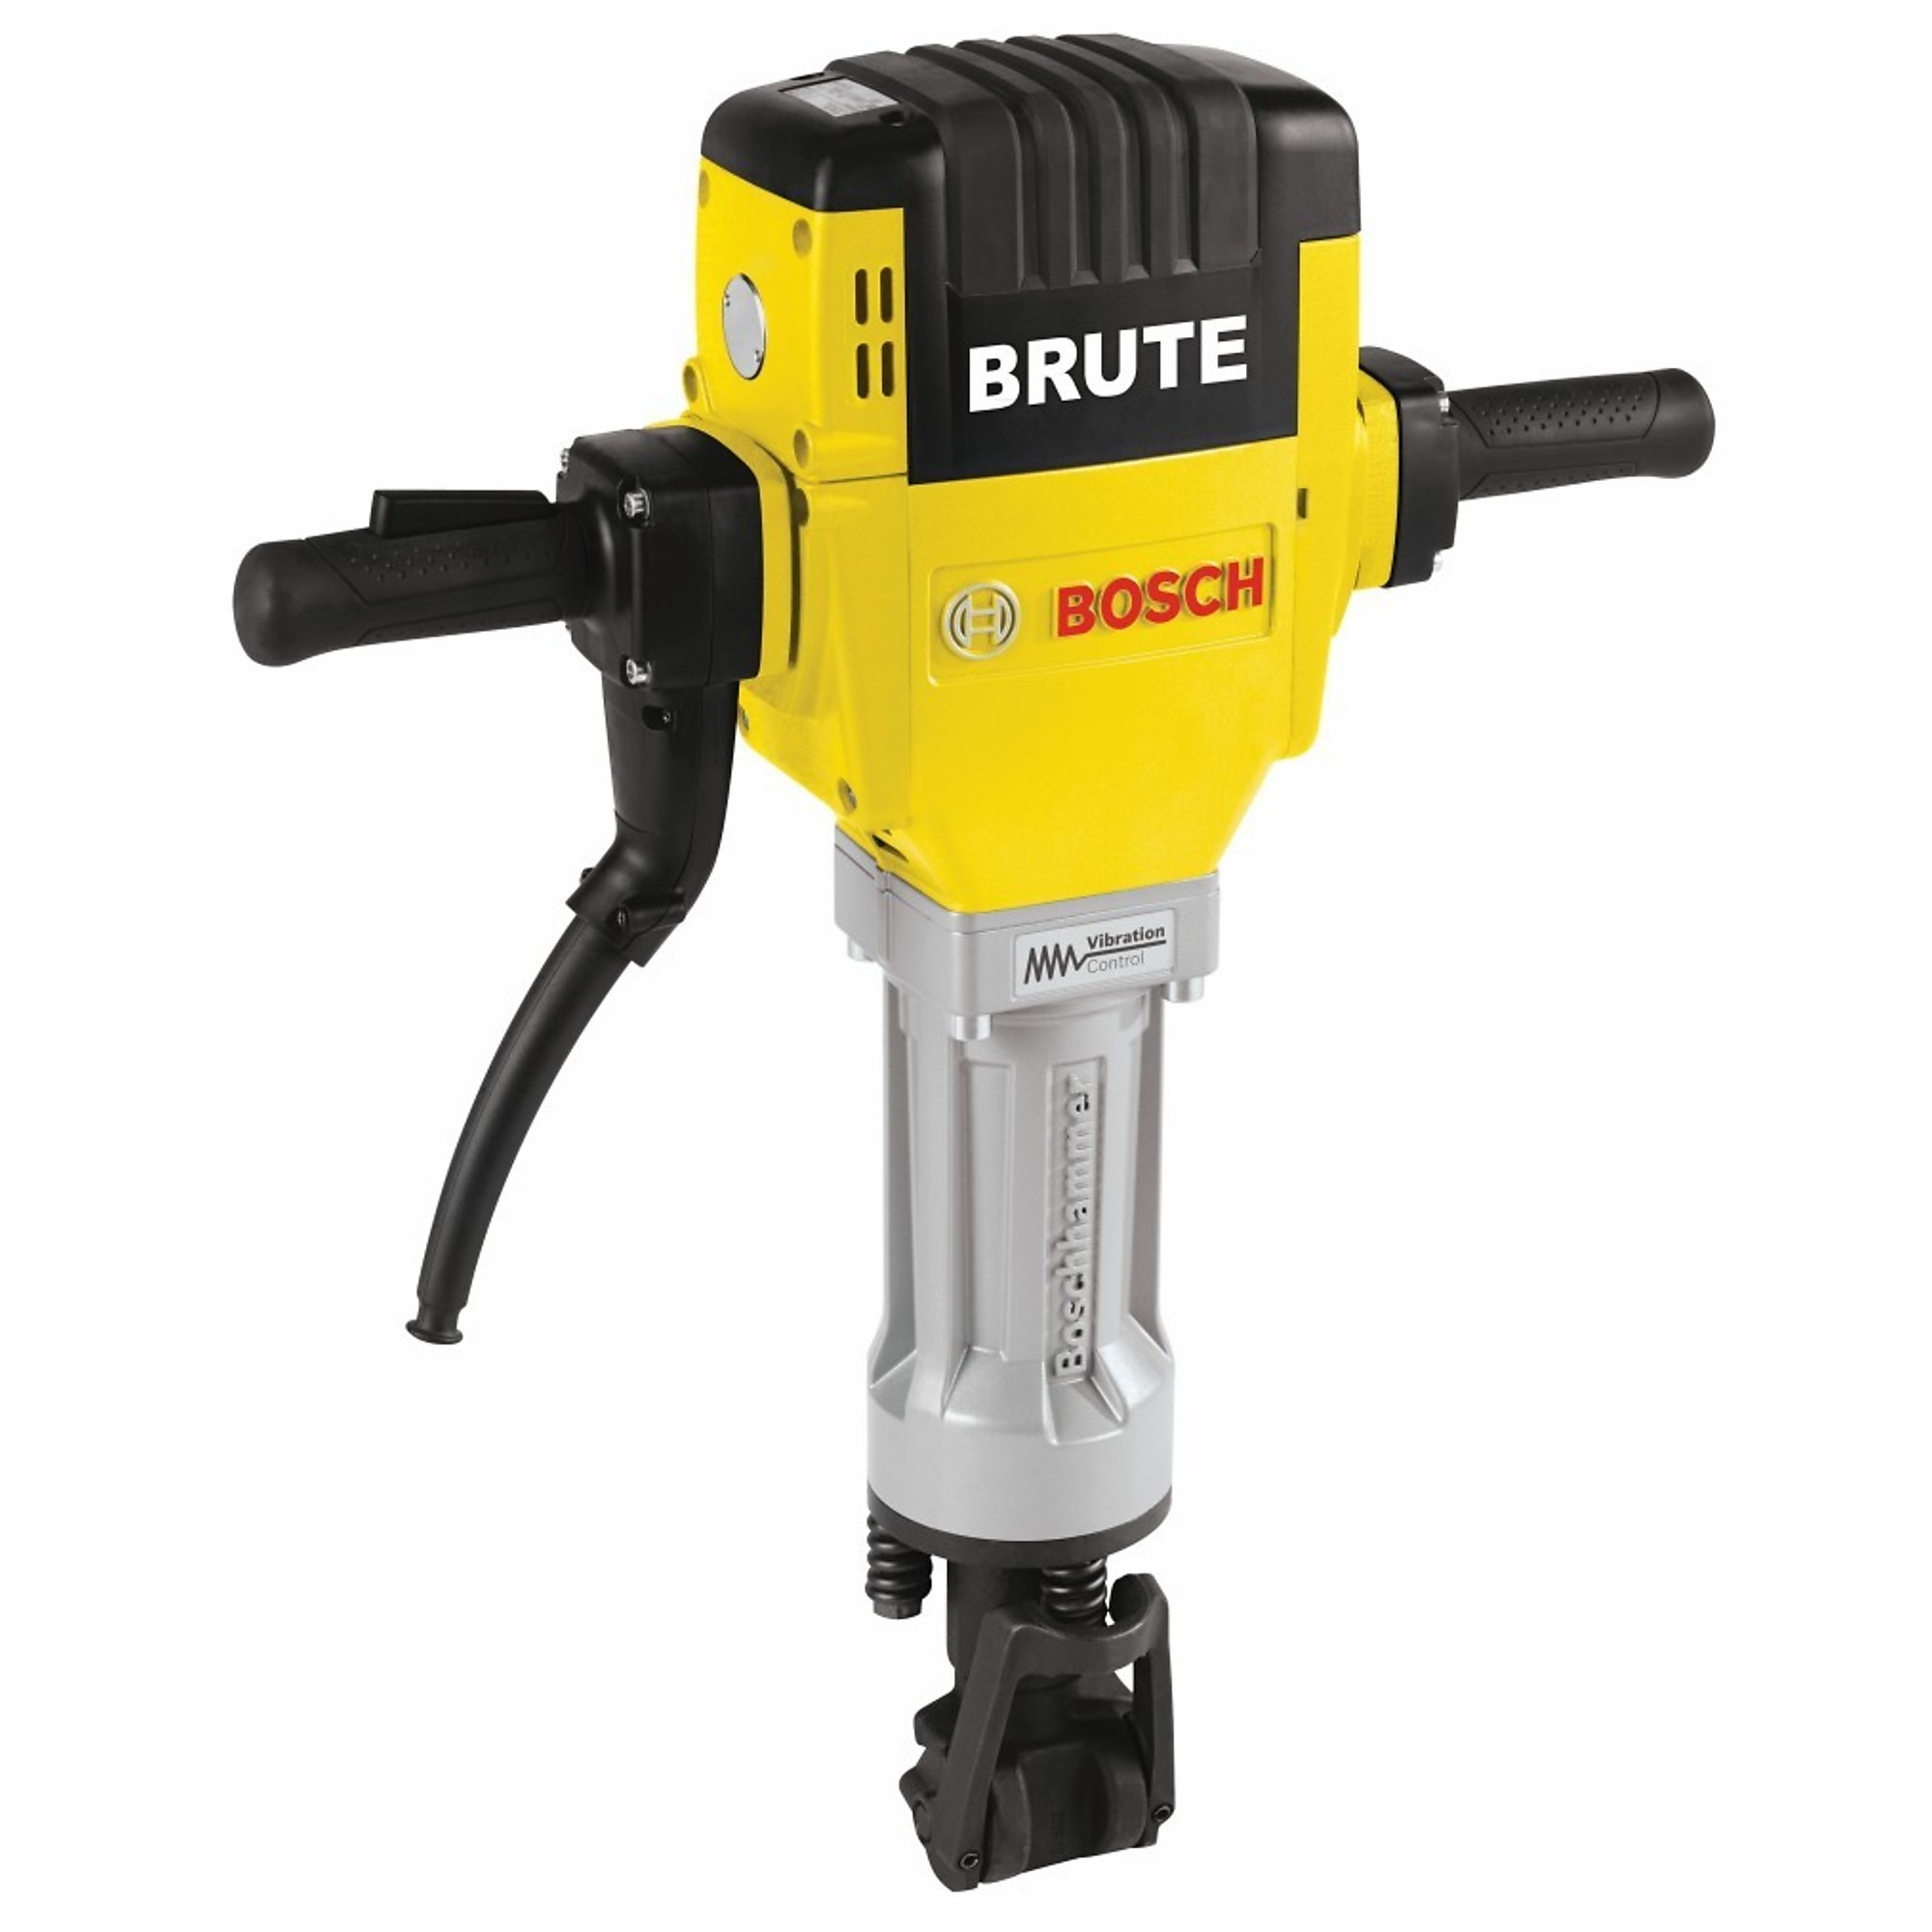 Bosch, Brute 1-1/8 Breaker Hammer, Amps 15, Volts 120, Max. Blows Per Minute 1000, Model BH2760VC